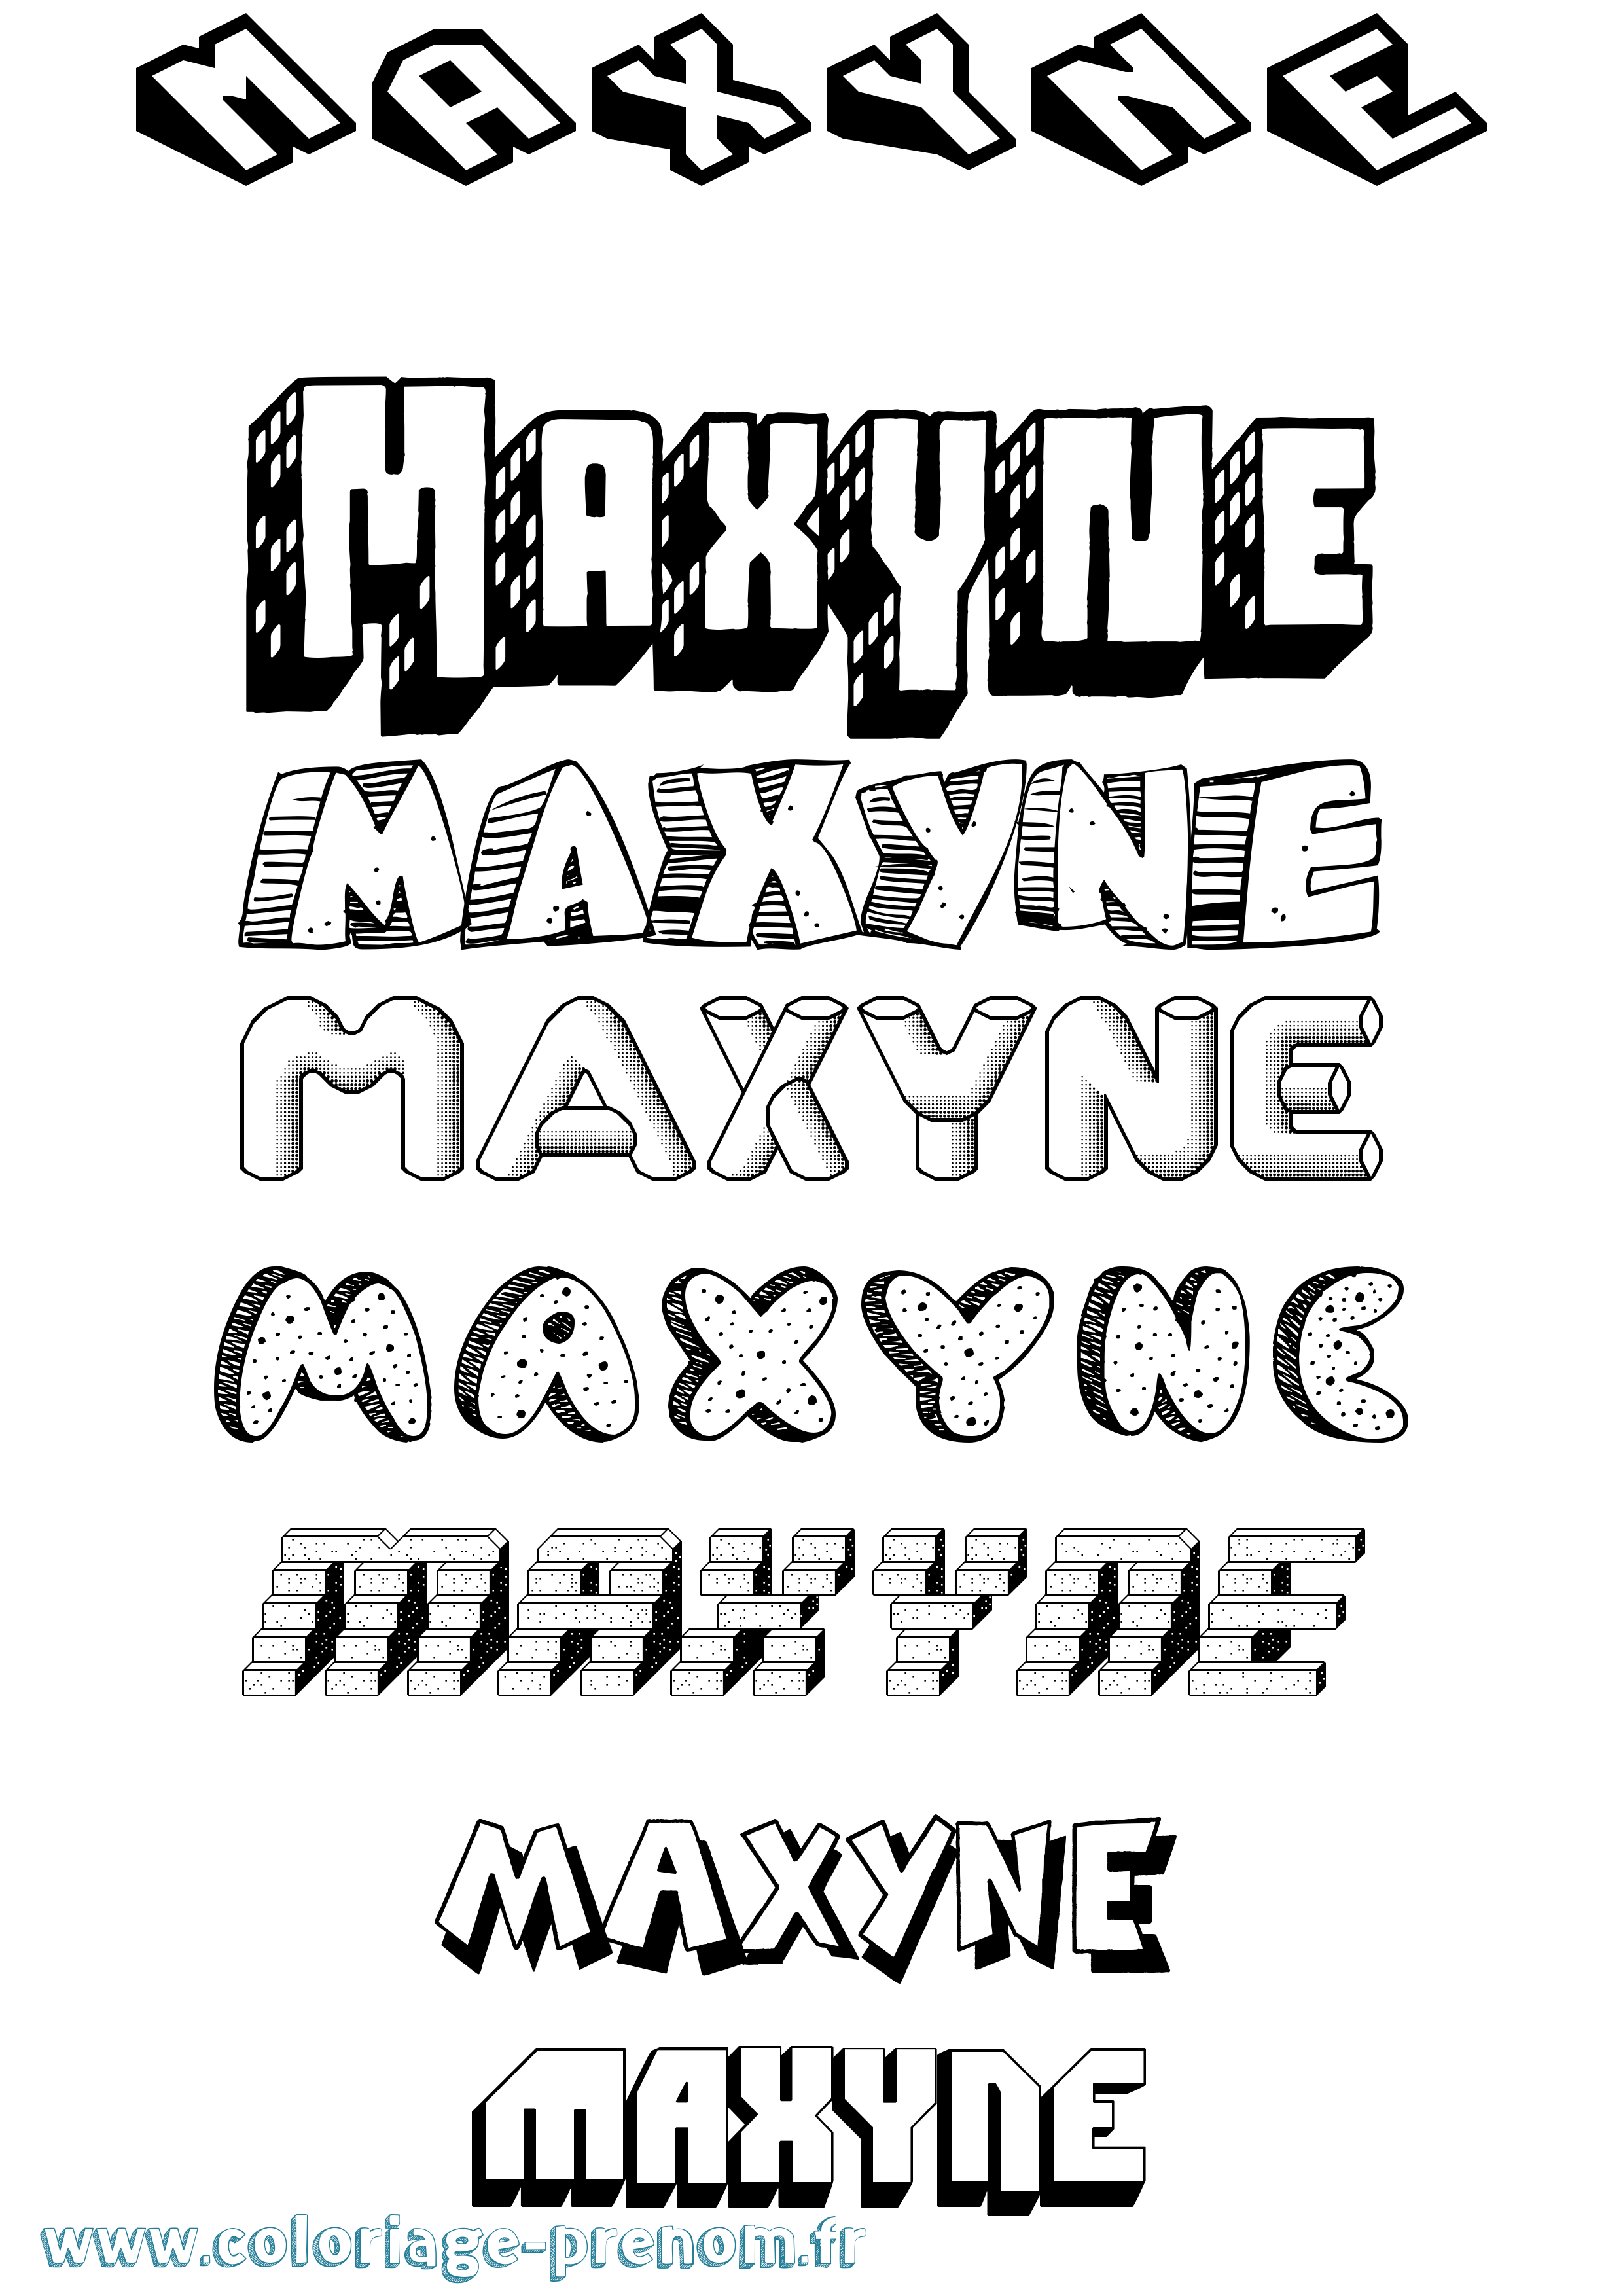 Coloriage prénom Maxyne Effet 3D